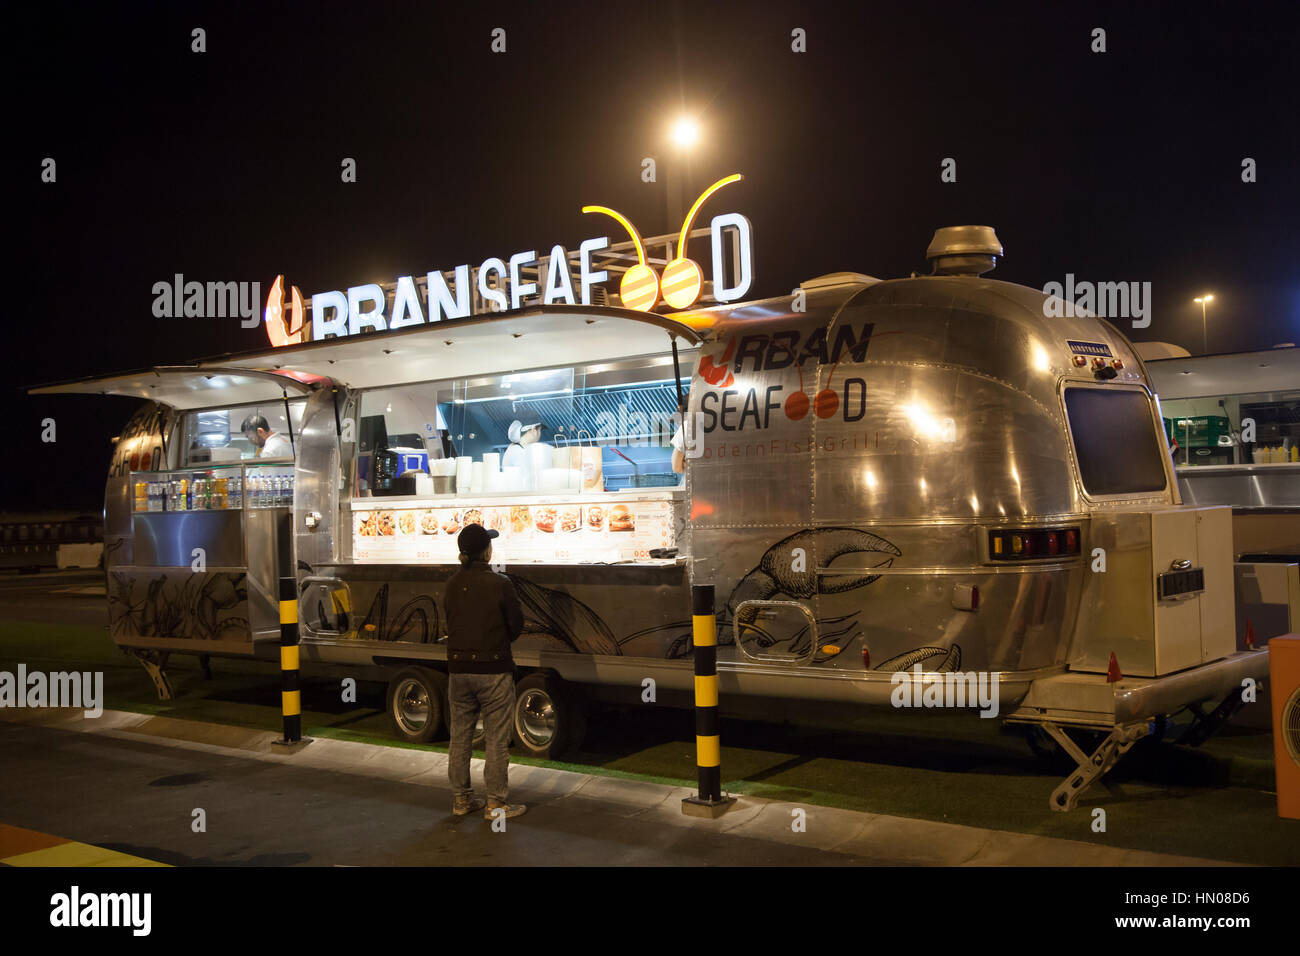 DUBAI, UAE - DEC 4, 2016: Airstream caravan food truck Urban Seafood at the Last Exit food trucks park on the E11 highway between Abu Dhabi and Dubai Stock Photo